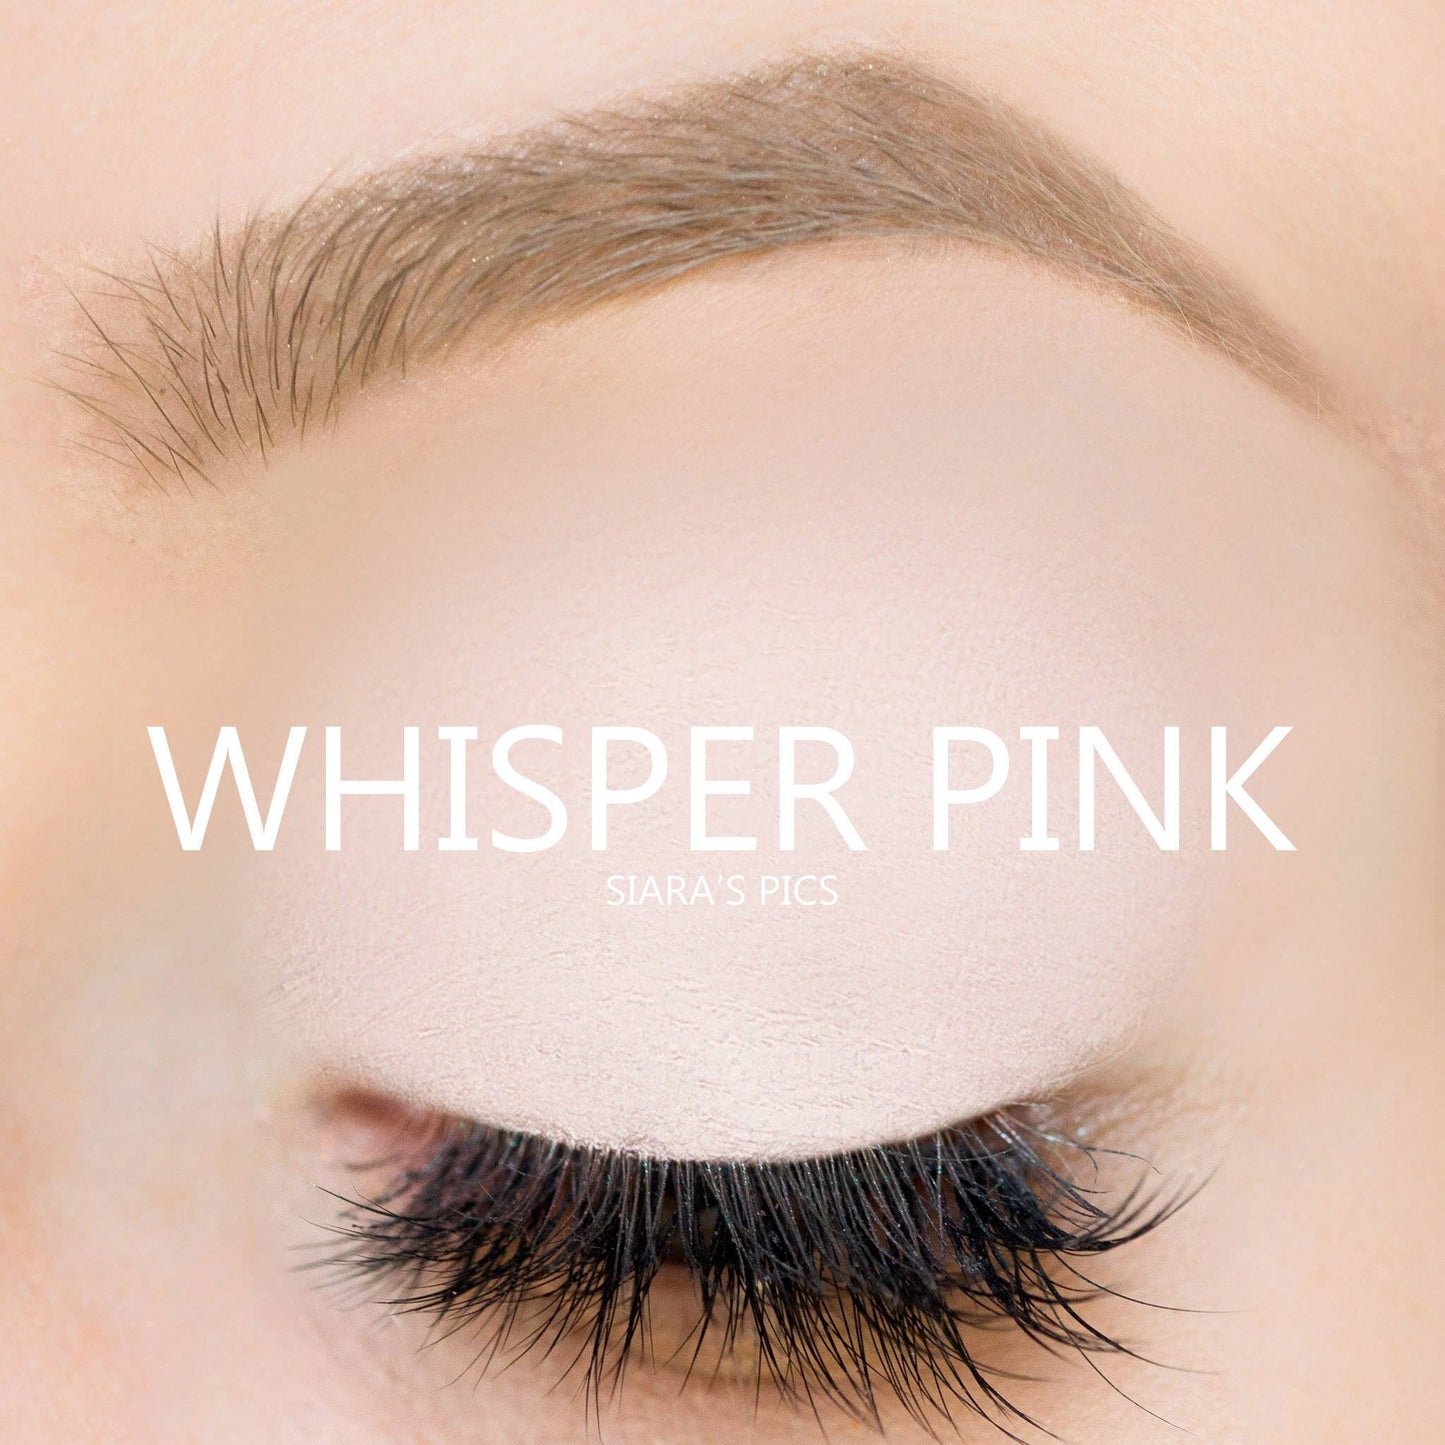 Whisper Pink ShadowSense